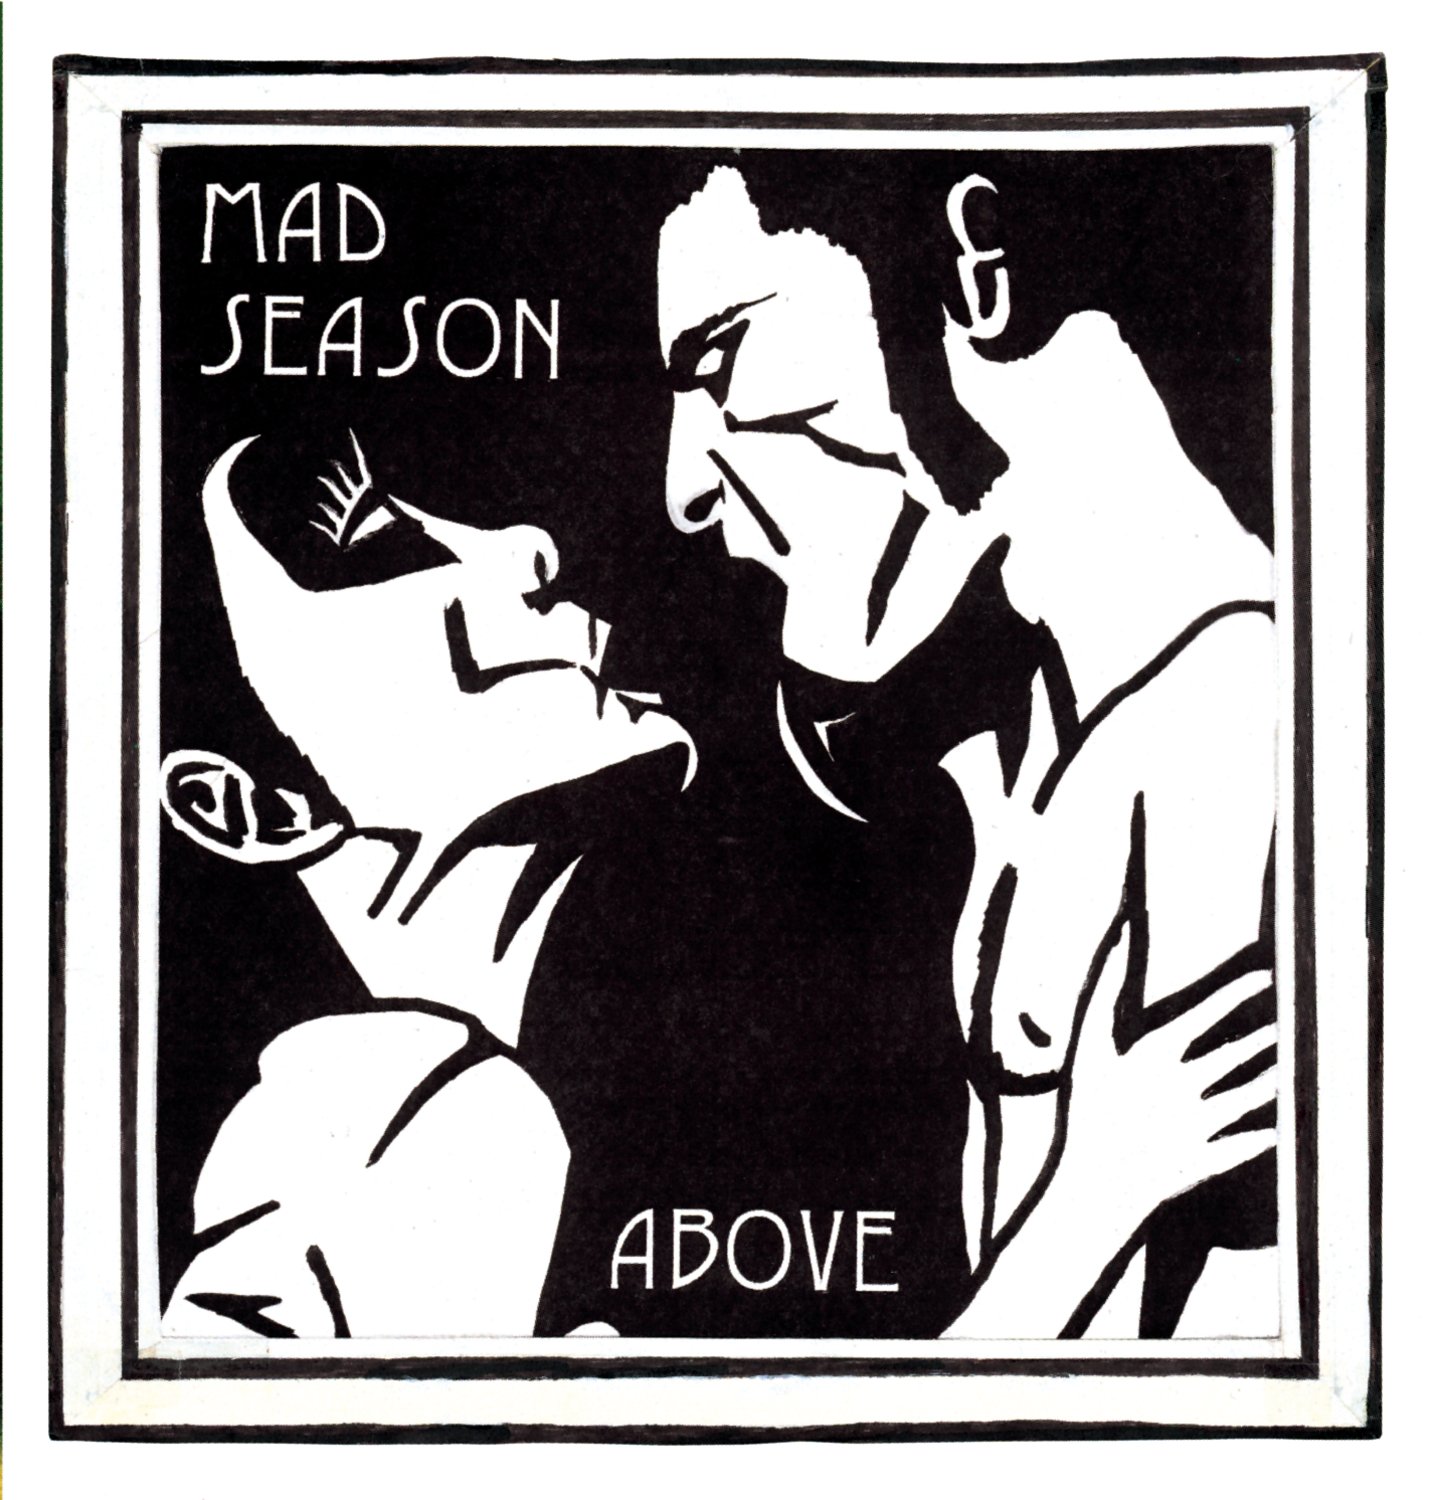 Mad Season "Above" 2LP